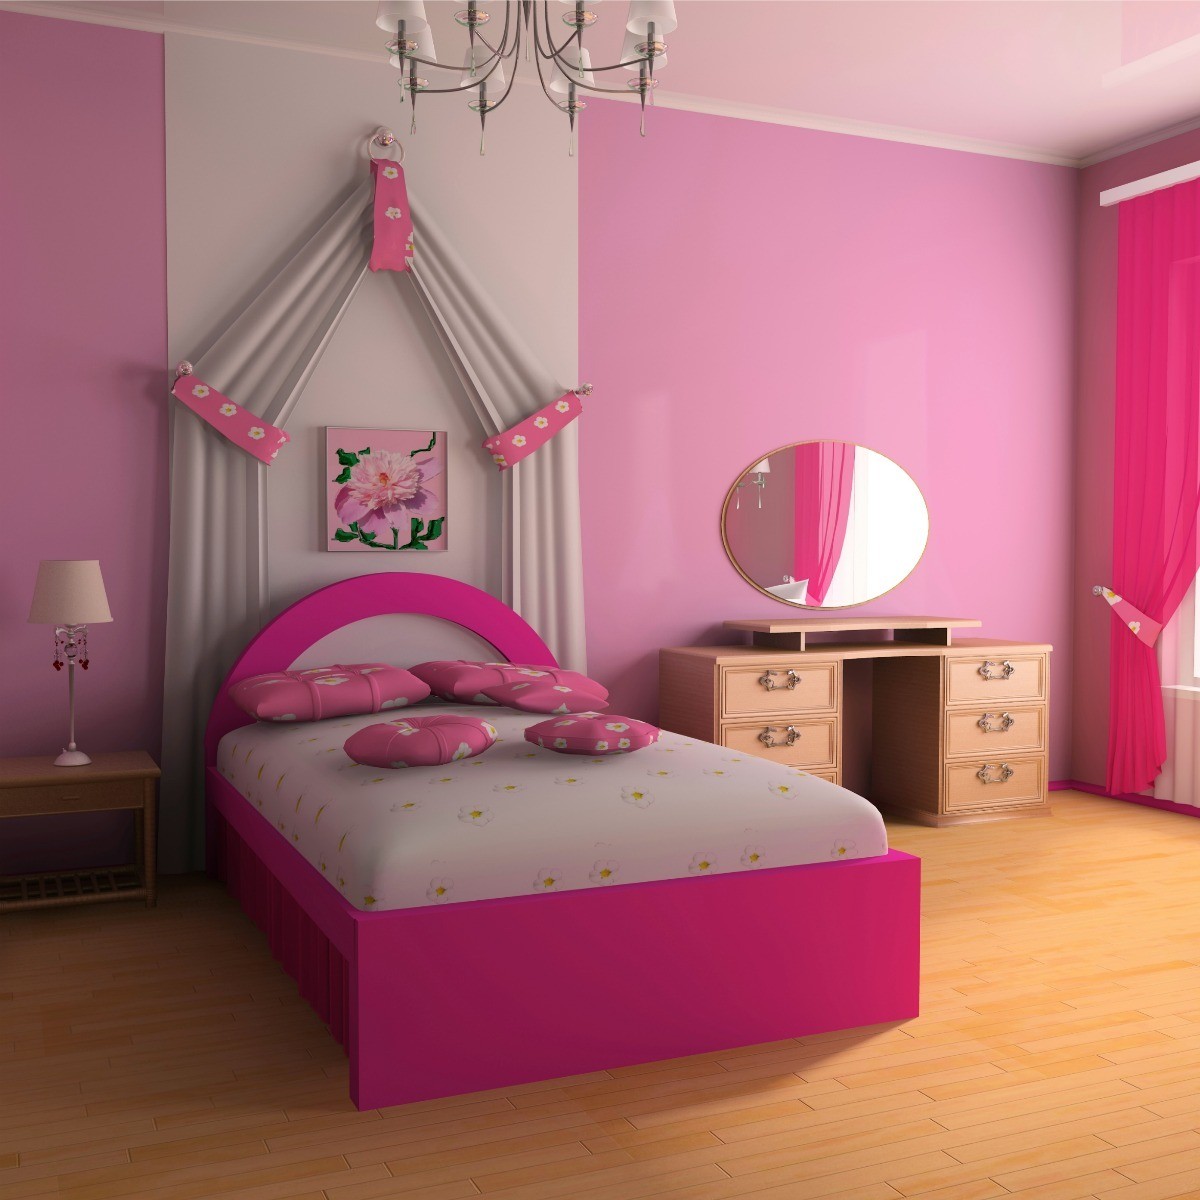 Themed Bedroom Ideas For Girls Thriftyfun